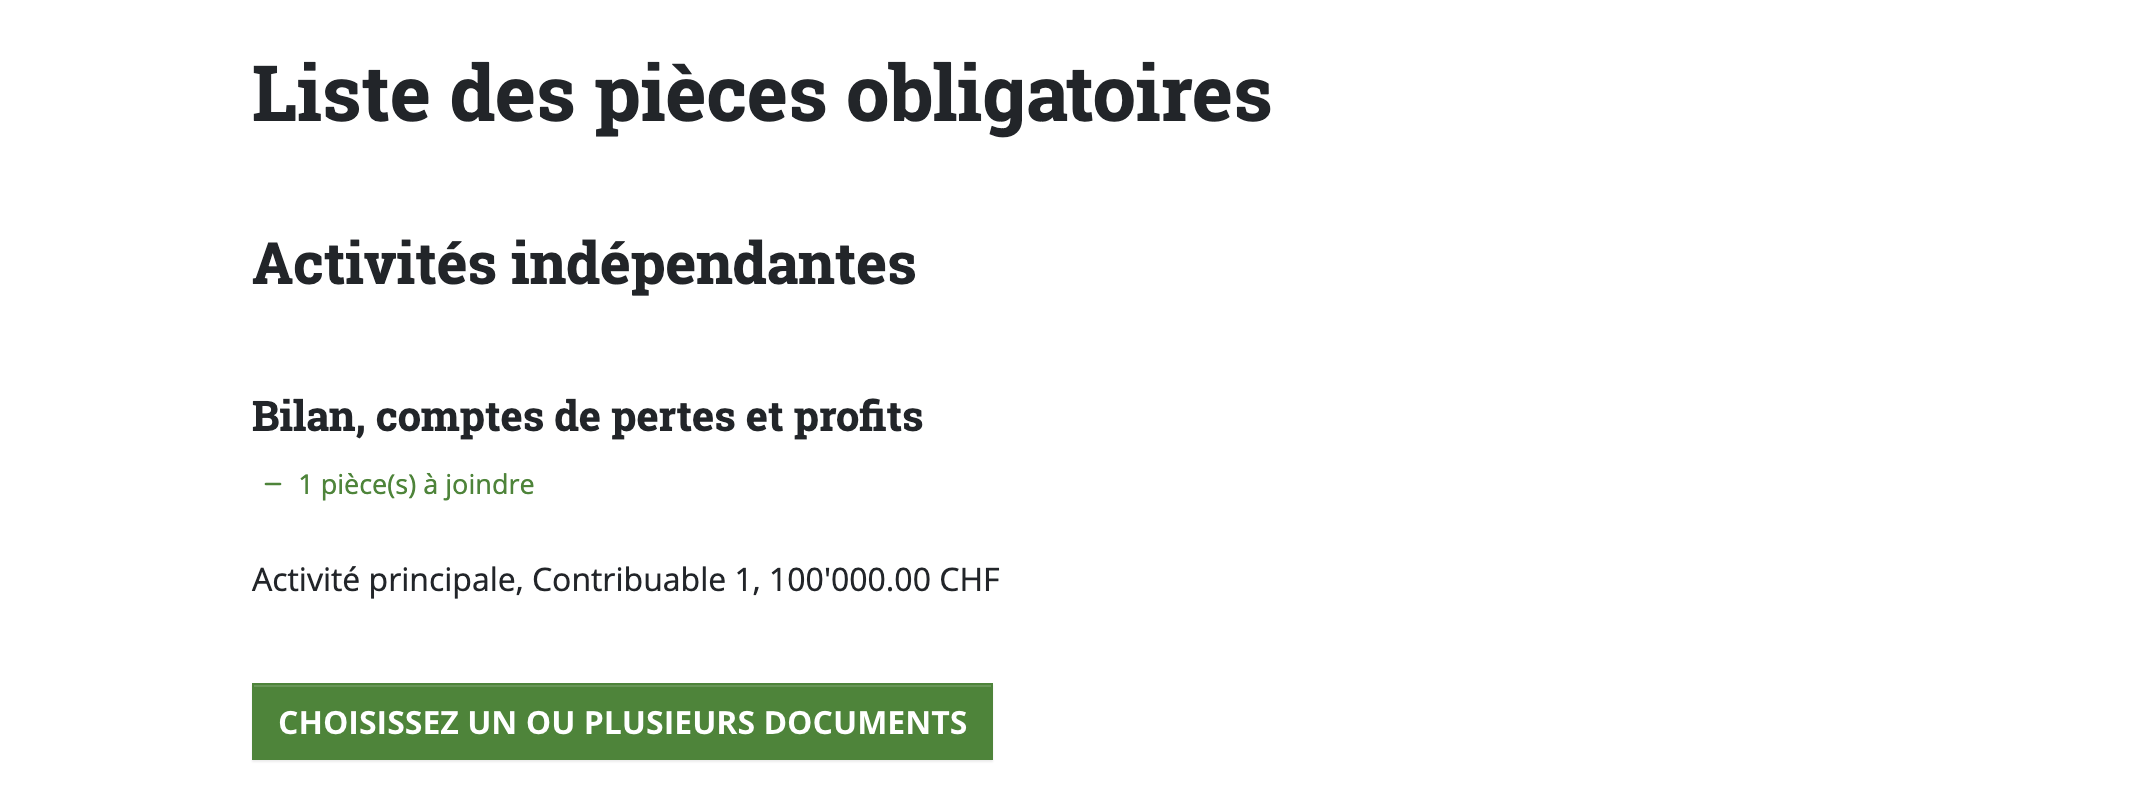 Pièce jointe obligatoire Vaud tax.png